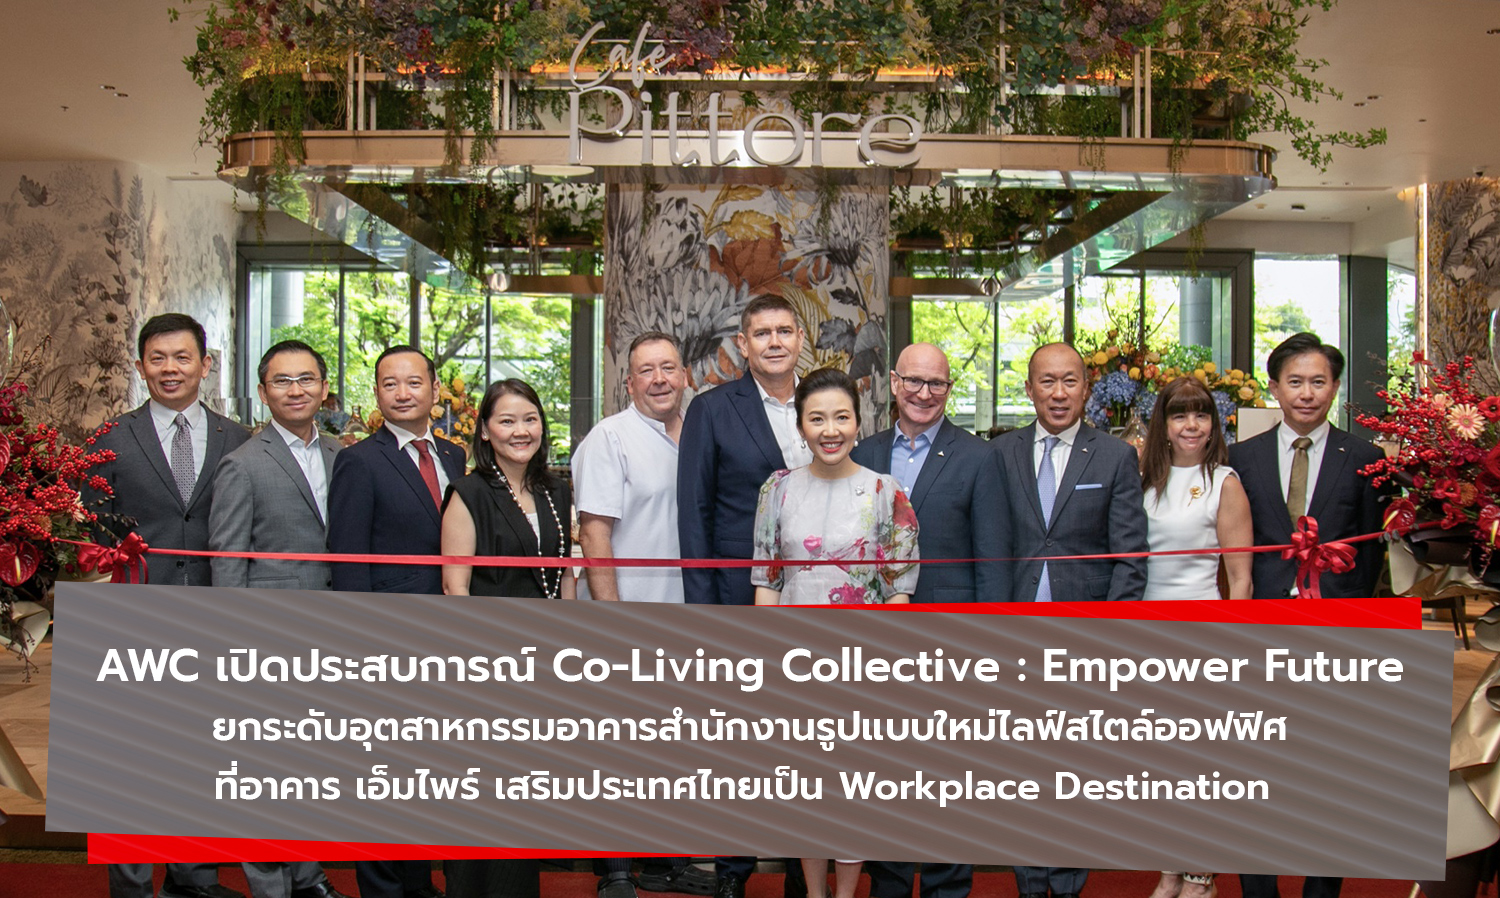 AWC เปิดประสบการณ์ Co-Living Collective: Empower Future ยกระดับอุตสาหกรรมอาคารสำนักงานรูปแบบใหม่ไลฟ์สไตล์ออฟฟิศ ที่อาคาร เอ็มไพร์ เสริมประเทศไทยเป็น Workplace Destination